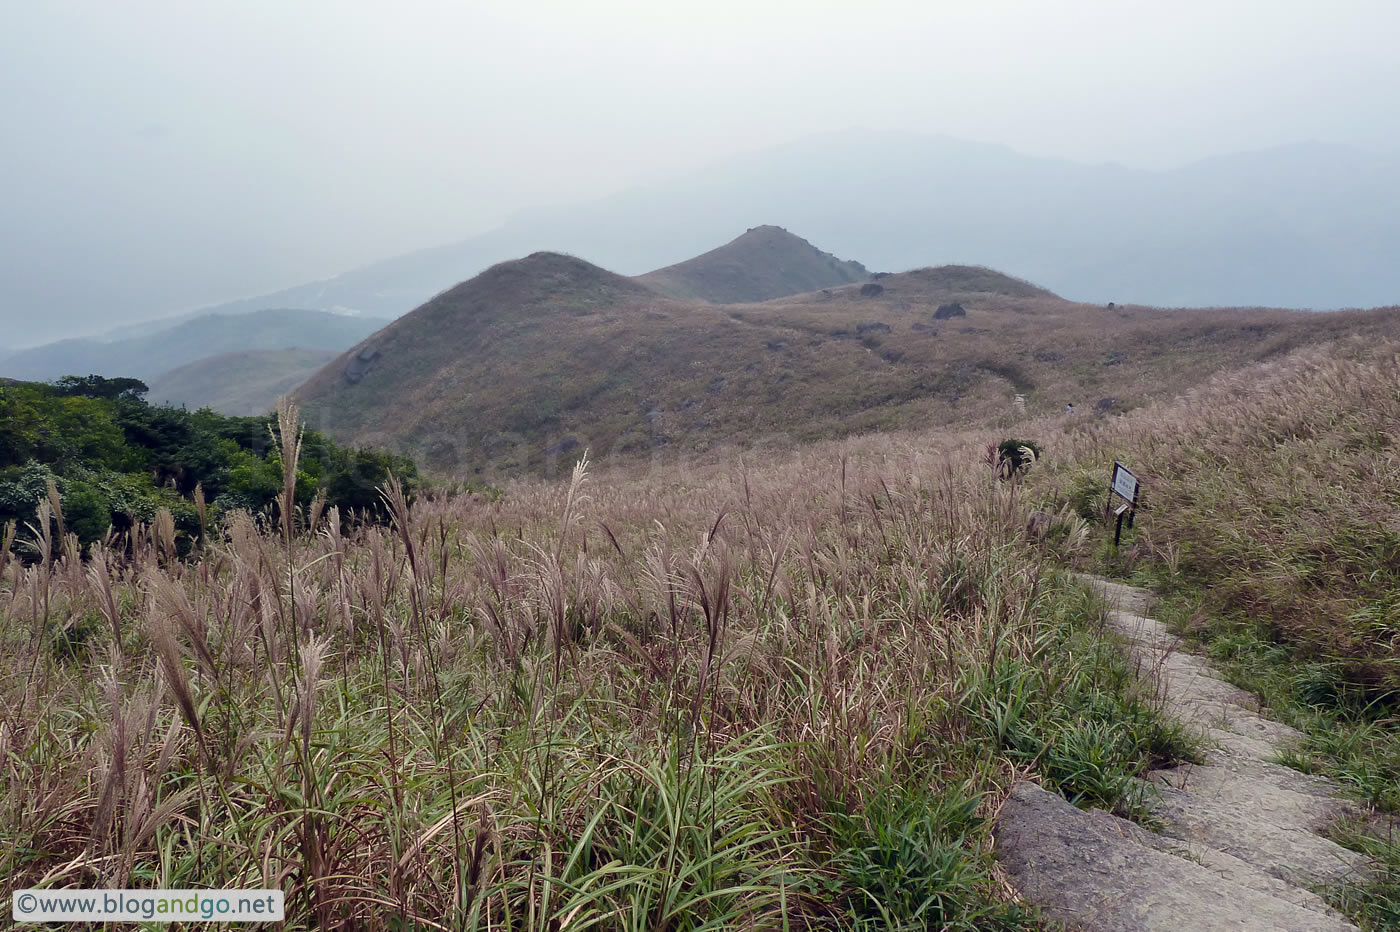 Lantau Trail - On the way down